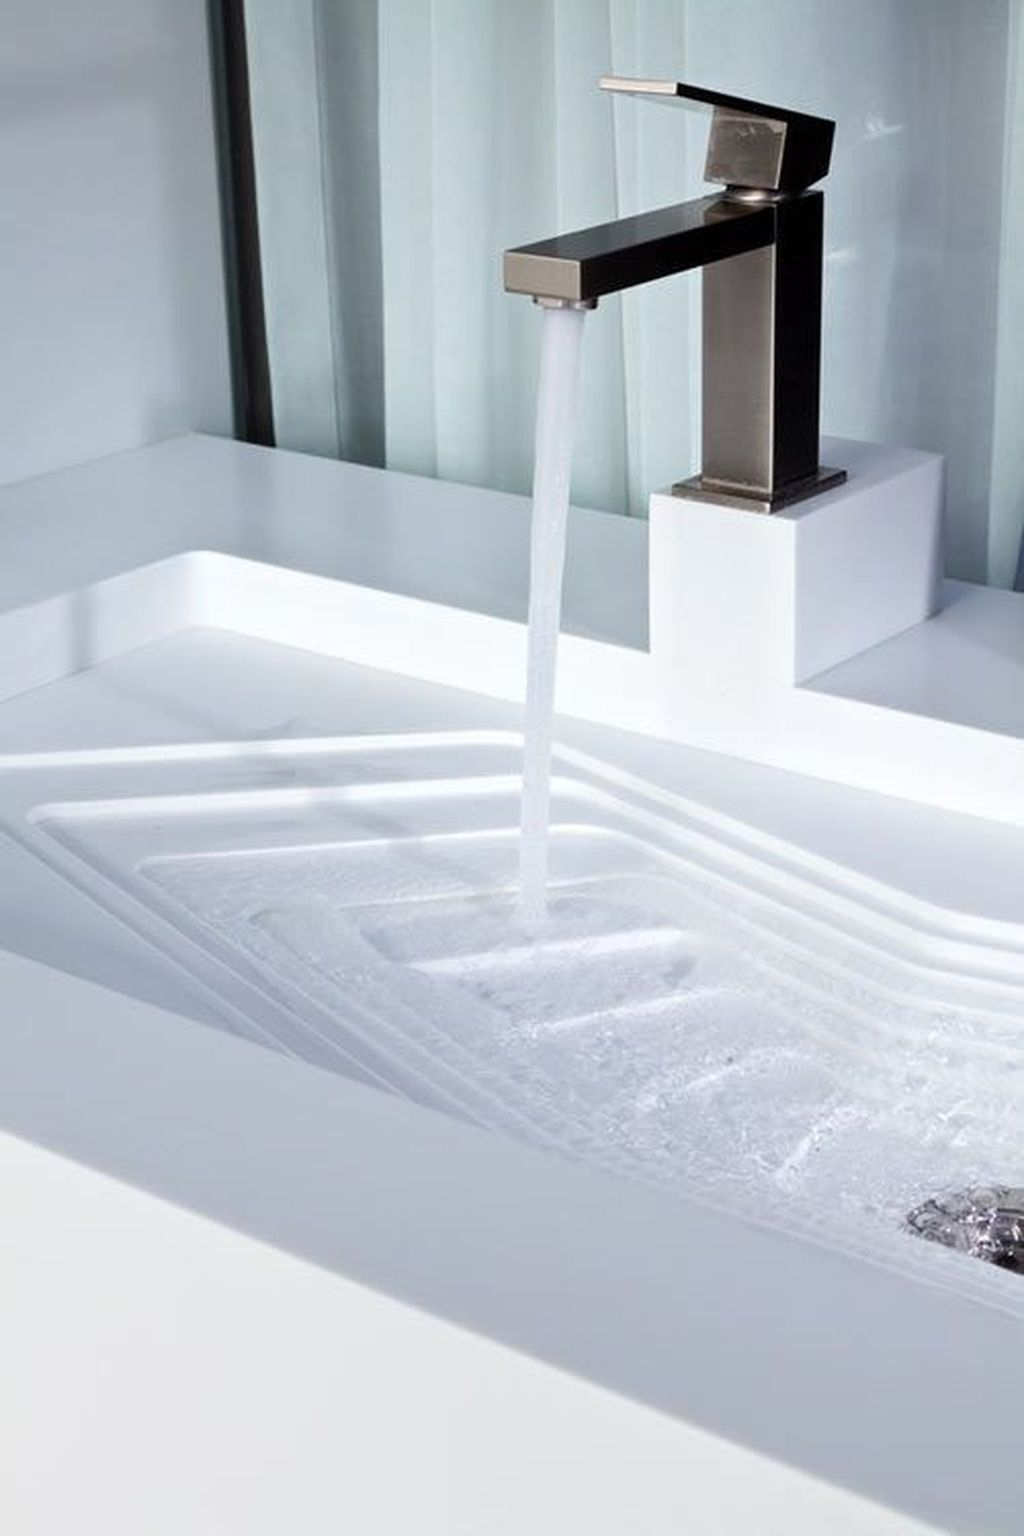 Enchanting Sink Design Ideas That Inspiring In This Year 26